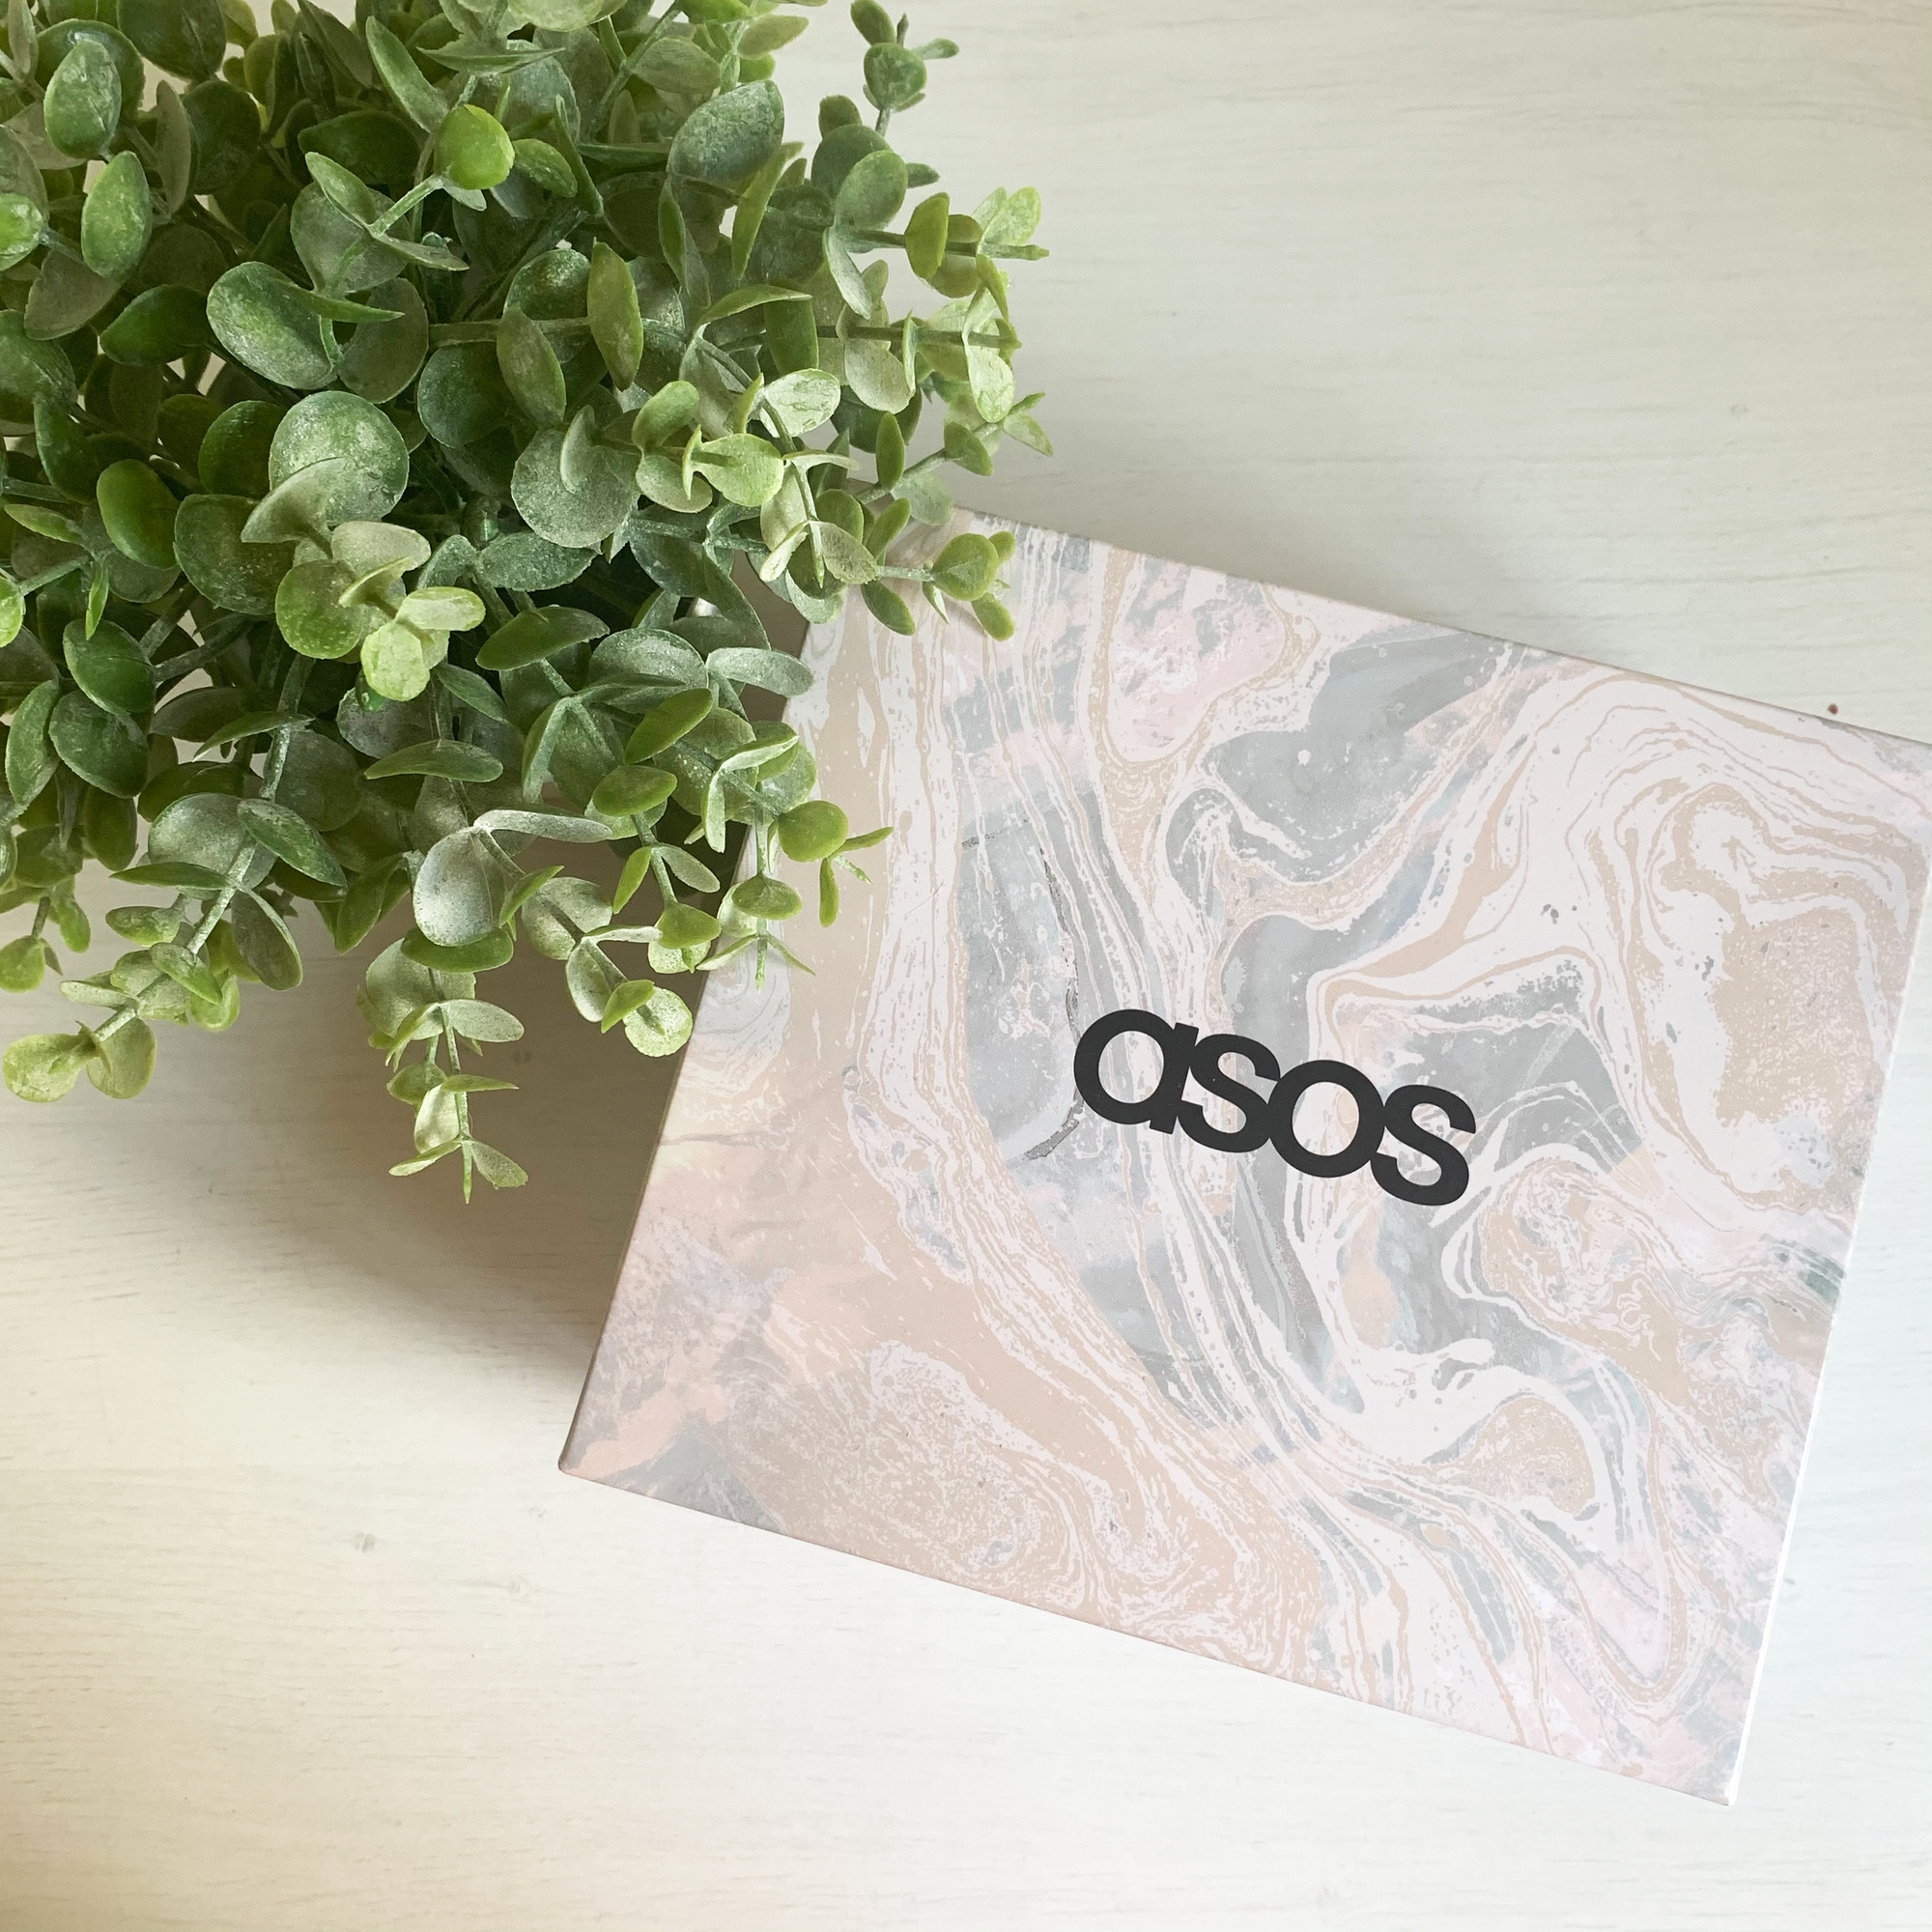 ASOS Beauty Box - November 2020 - Miss Boux